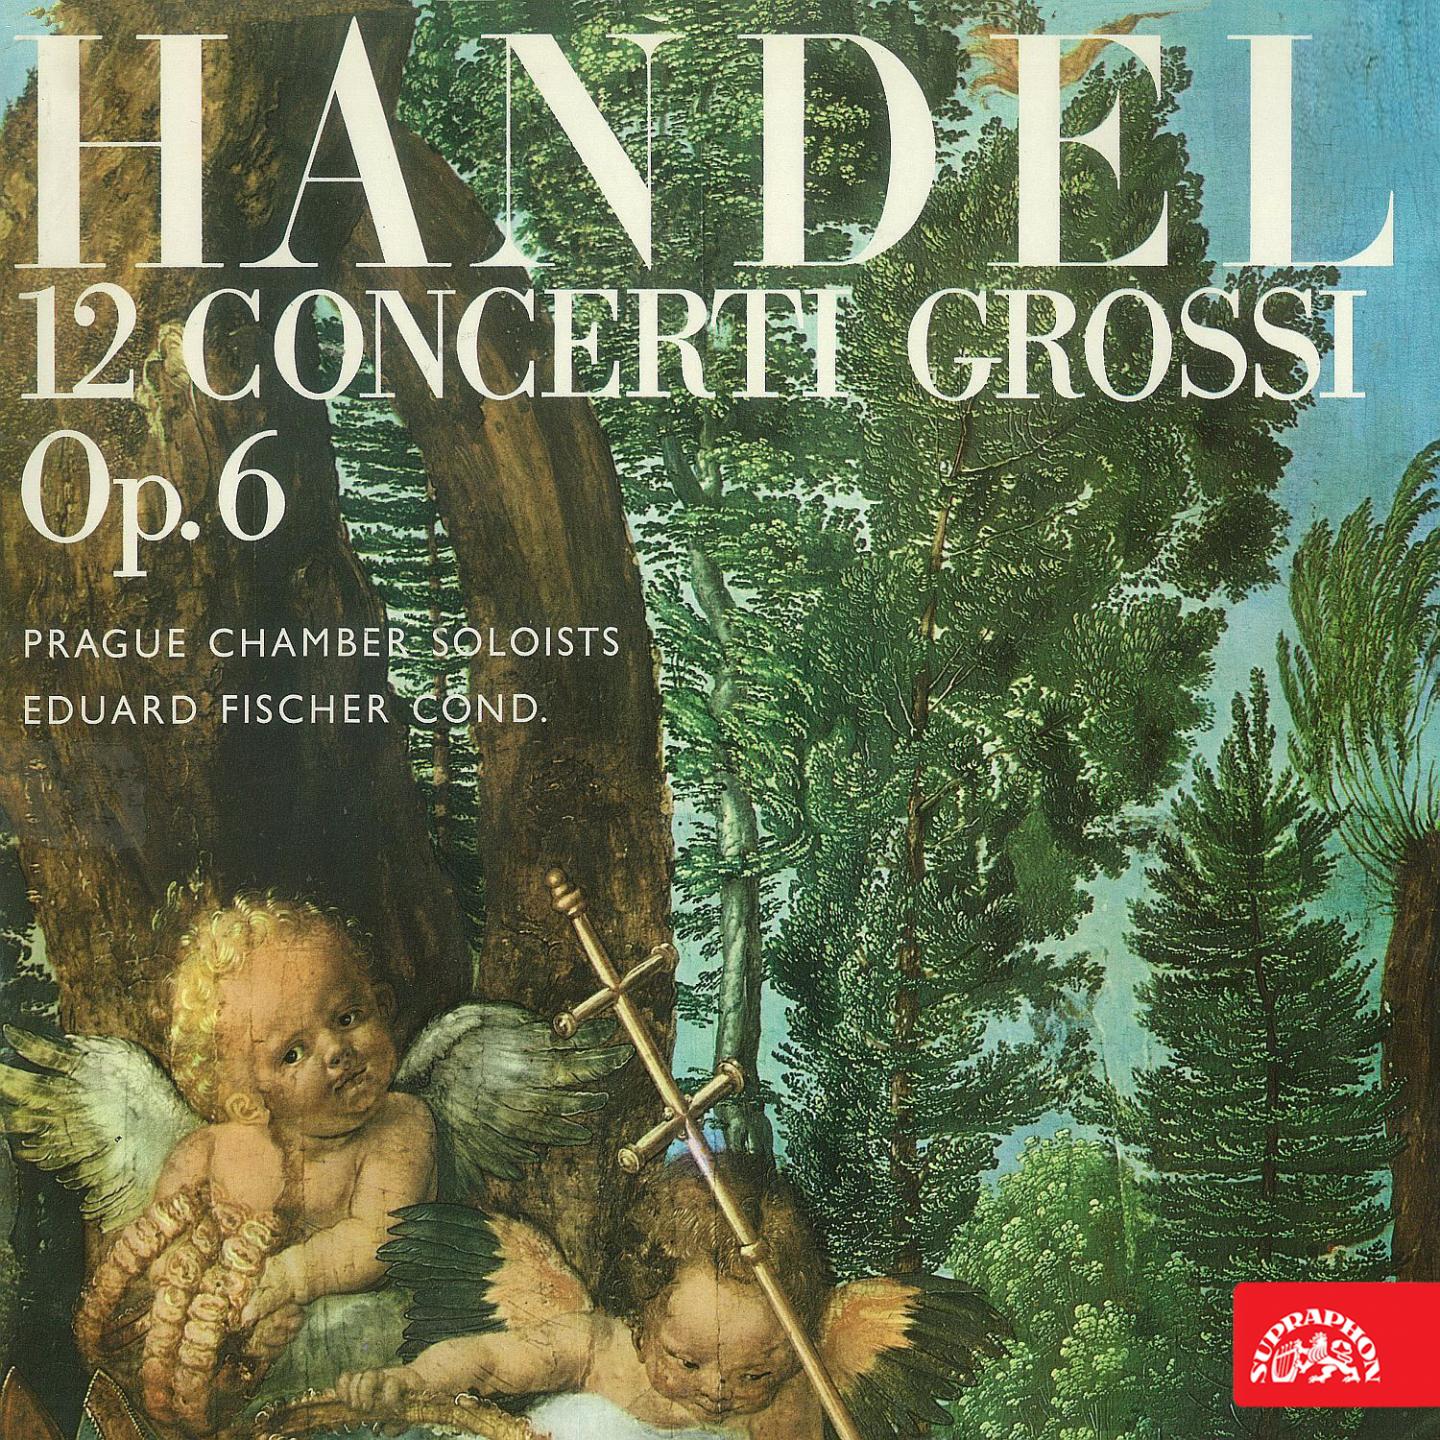 12 Concerti grossi, Op. 6, No. 6 in G Minor, HWV 324: I. Largo affettuoso